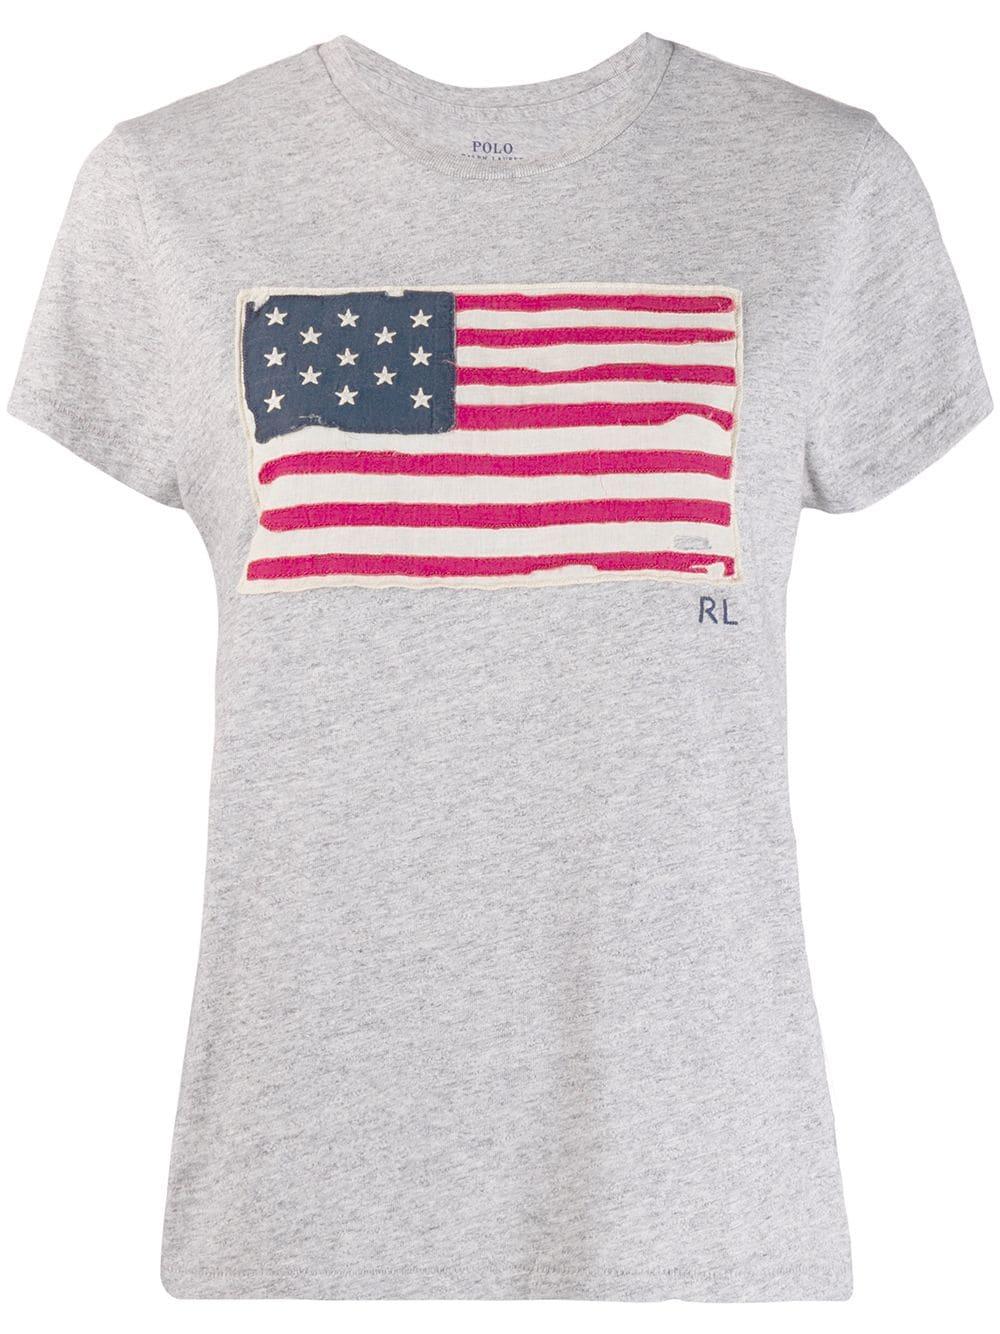 Polo Ralph Lauren Usa Flag T-shirt in Grey | Lyst Canada